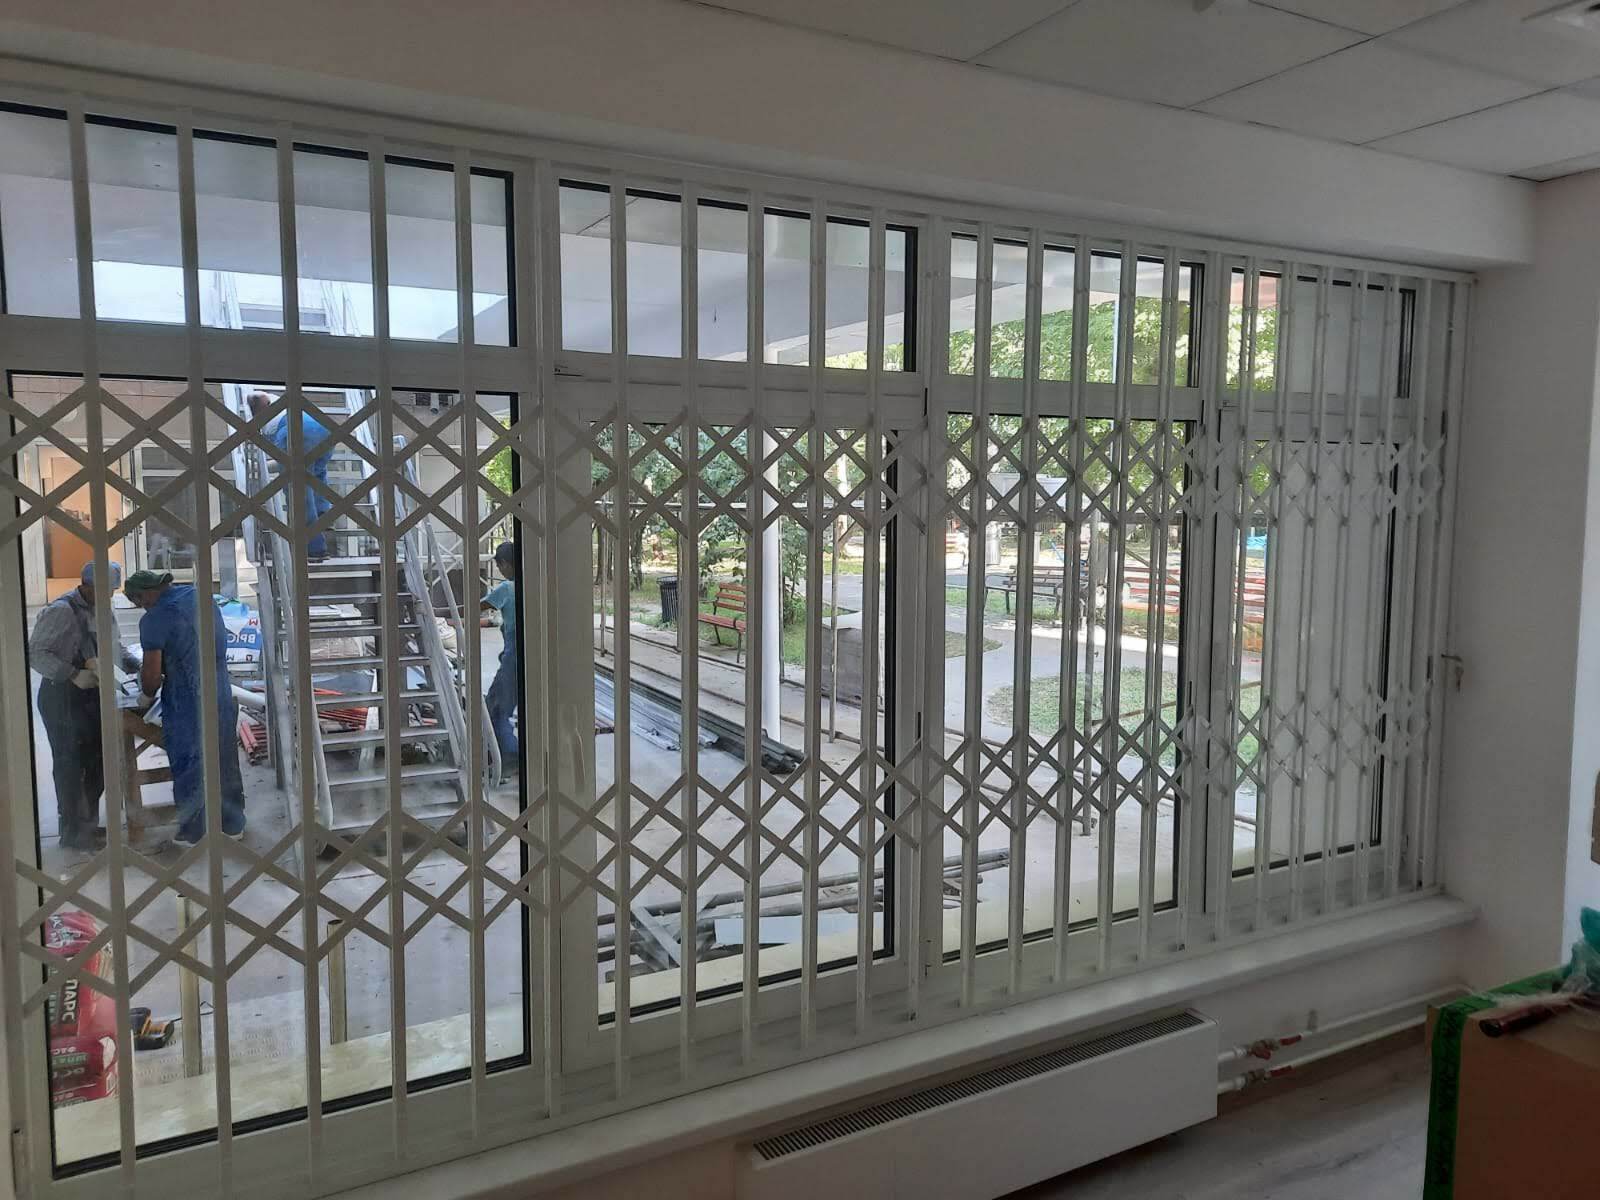 Установка металлических раздвижных решеток на окна изнутри помещения для МФЦ